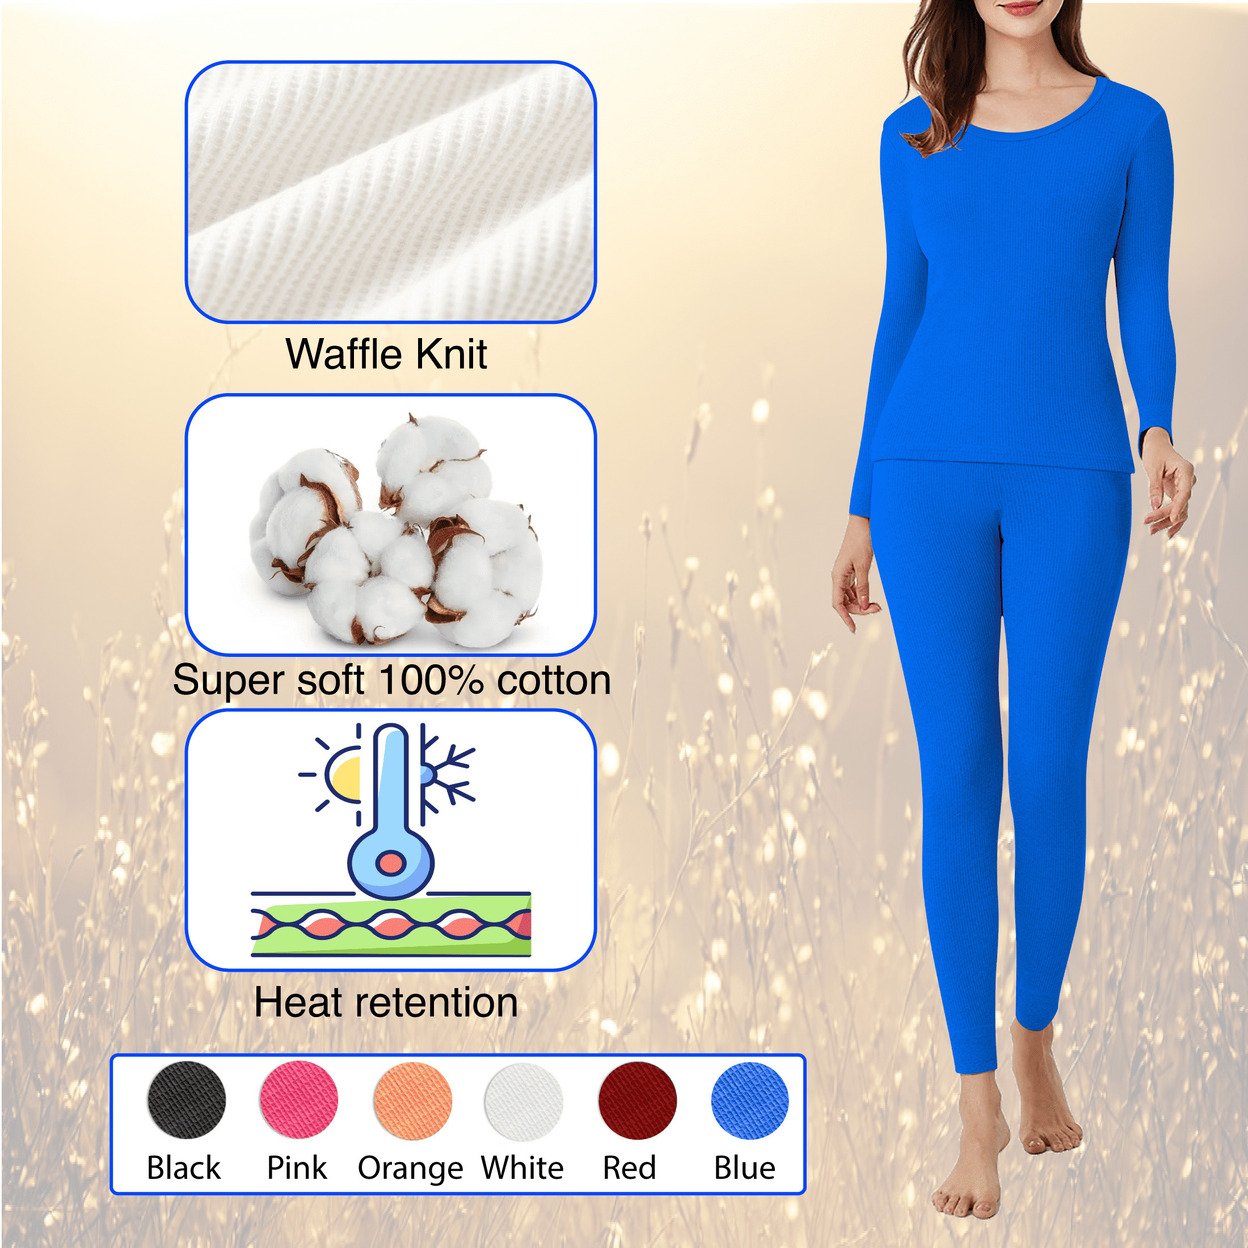 2-Piece: Women's Ultra Soft Cotton Waffle Knit Thermal Sets - Blue, Large